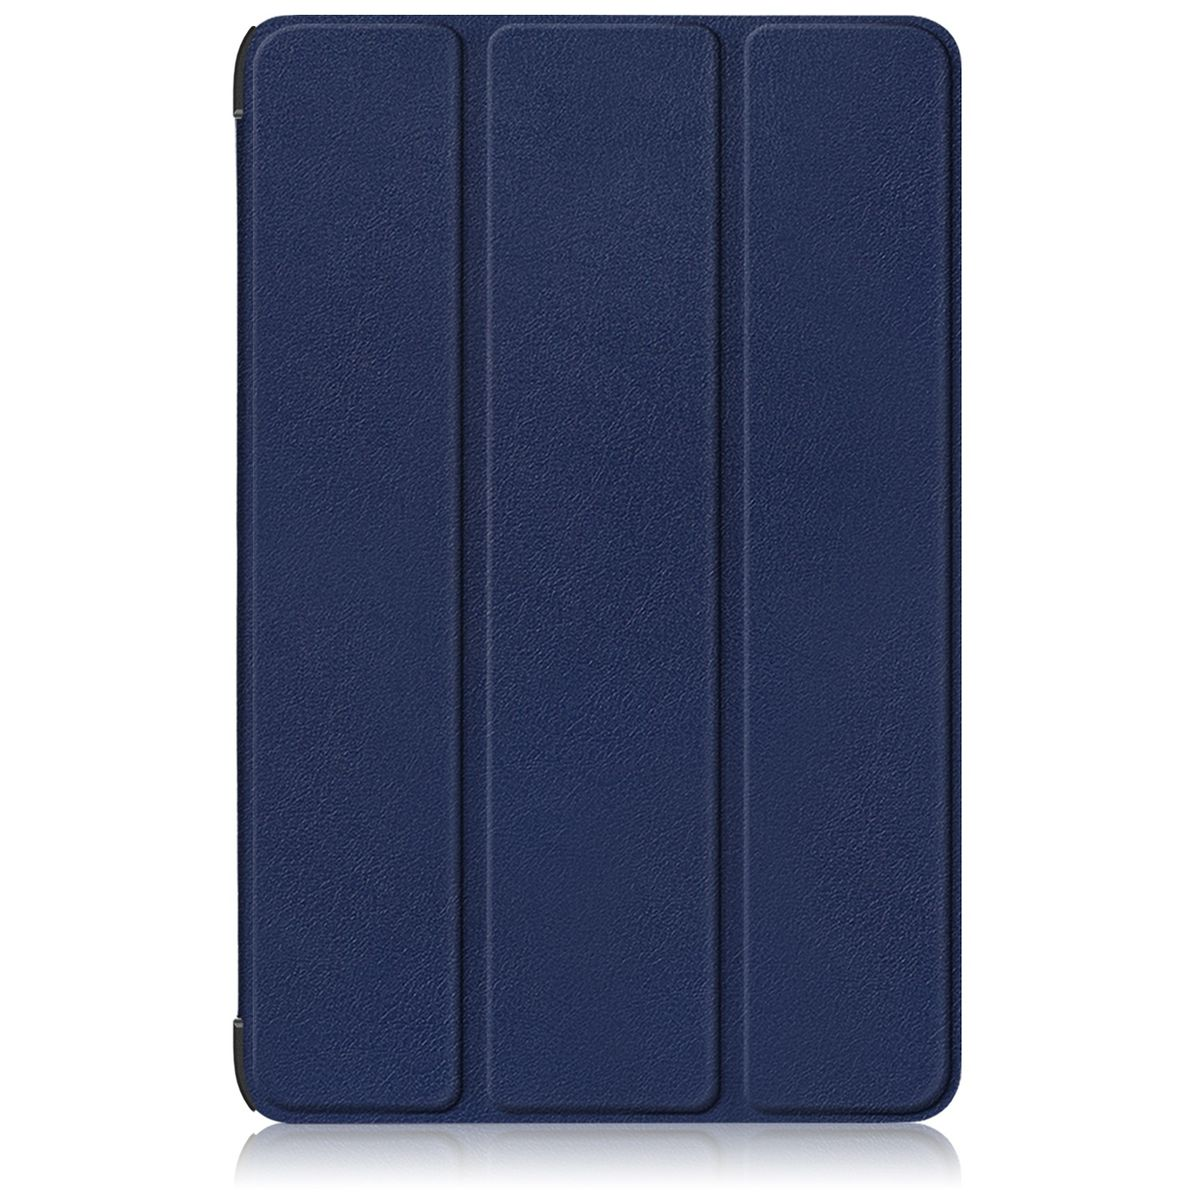 UP / / Full 3folt Cover & Cover Wake Tablethülle Samsung für Sleep WIGENTO Smart Kunststoff aufstellbar Kunstleder, Silikon Dunkelblau